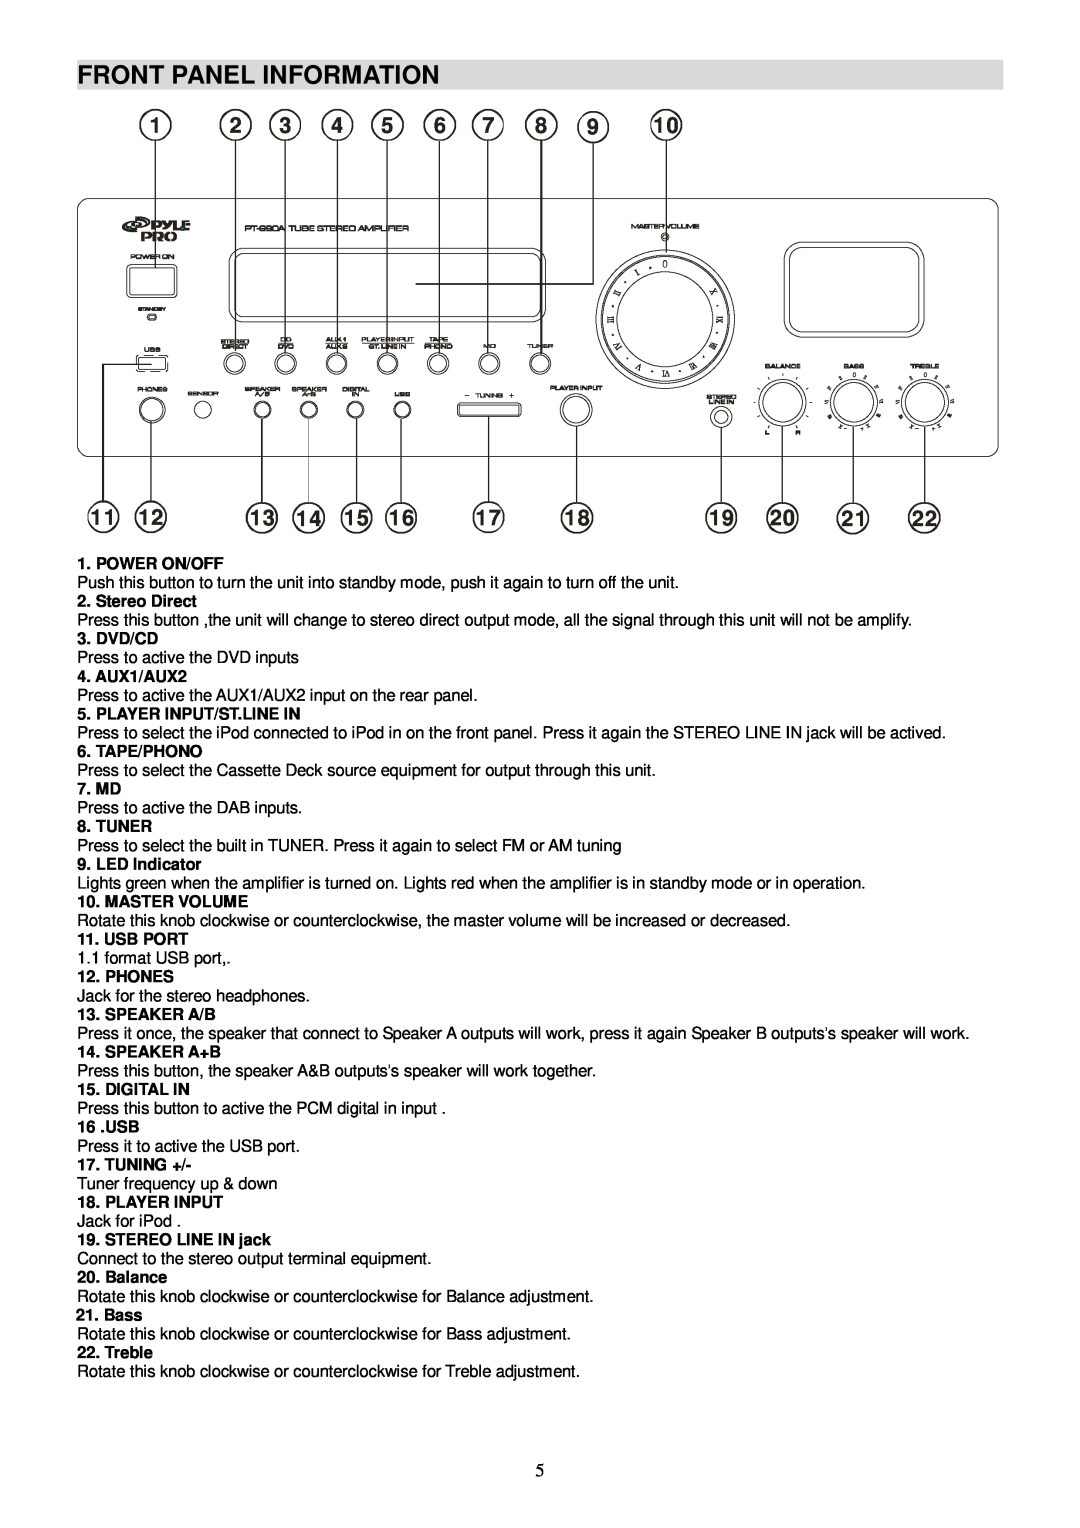 Radio Shack PT-990A manual Front Panel Information 